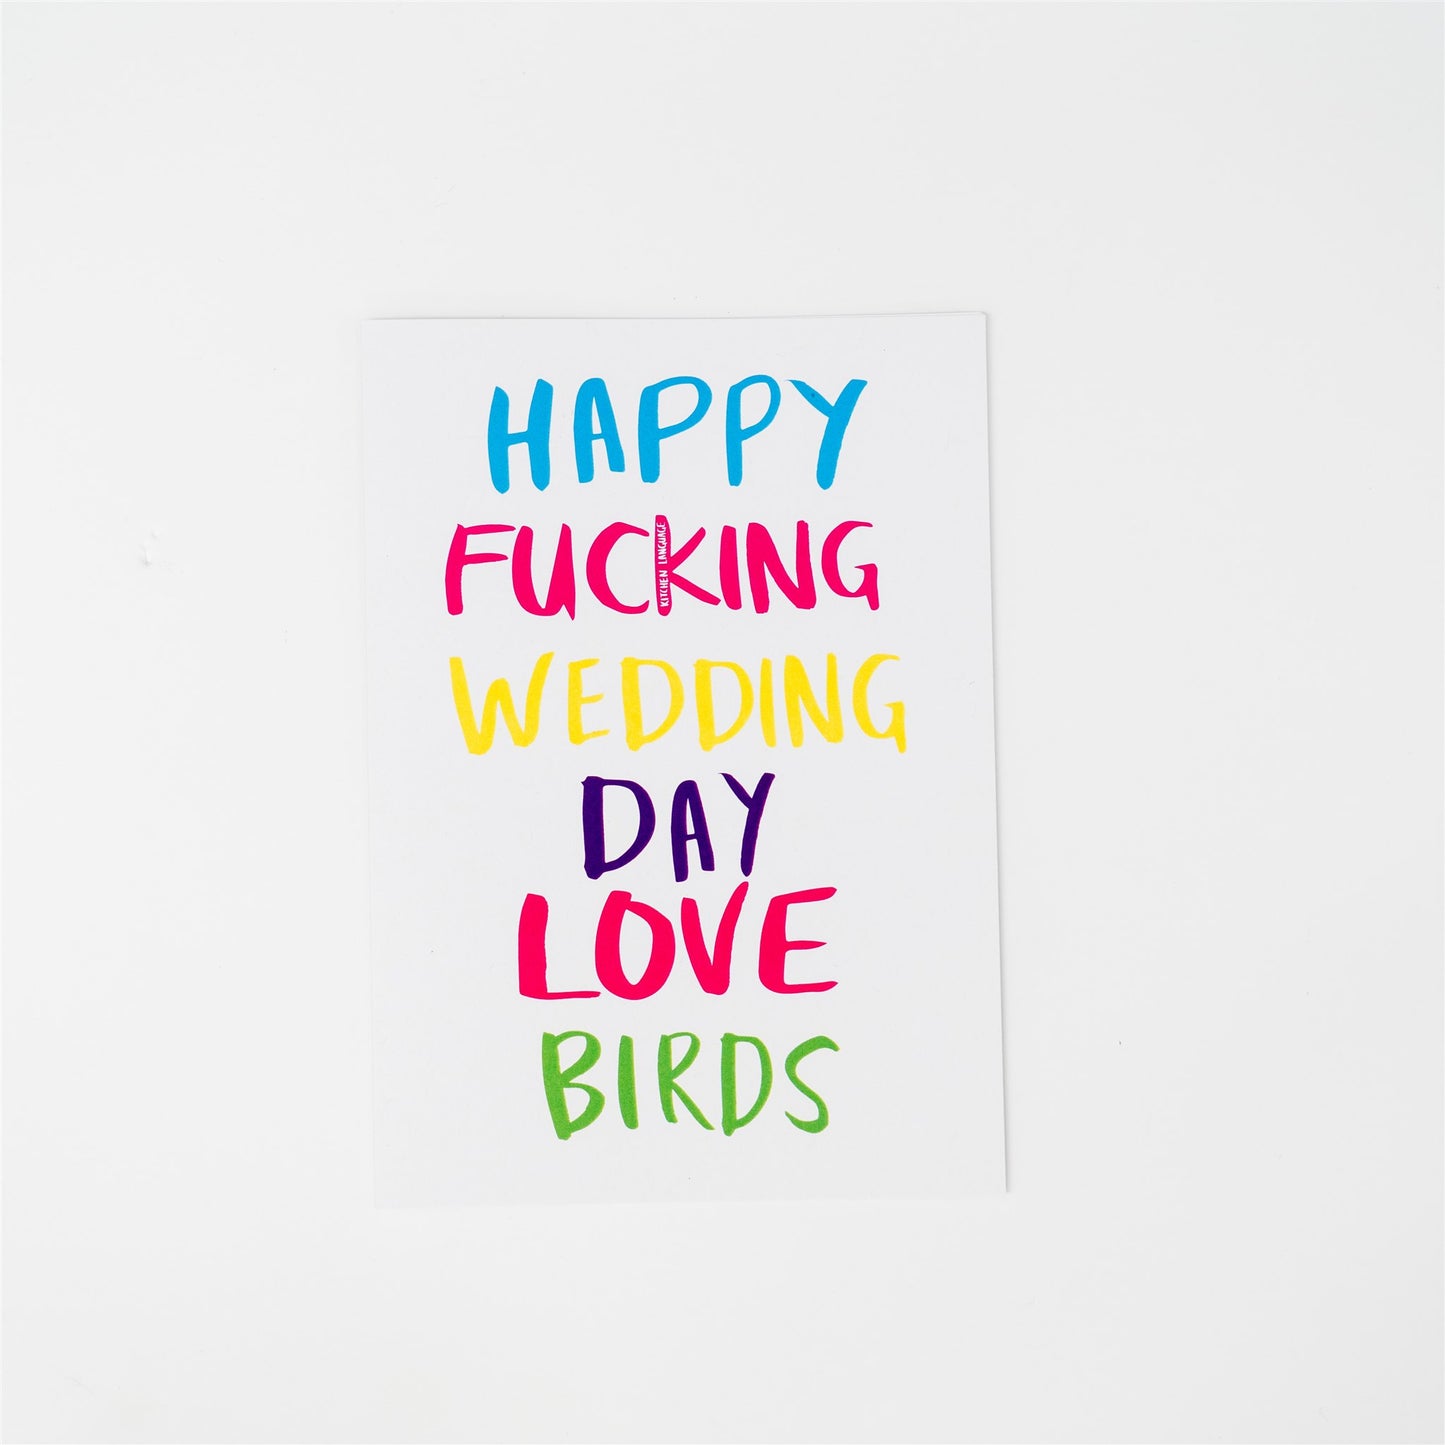 Happy Fucking Fucking Wedding Day Love Birds- greeting card- kitchen language